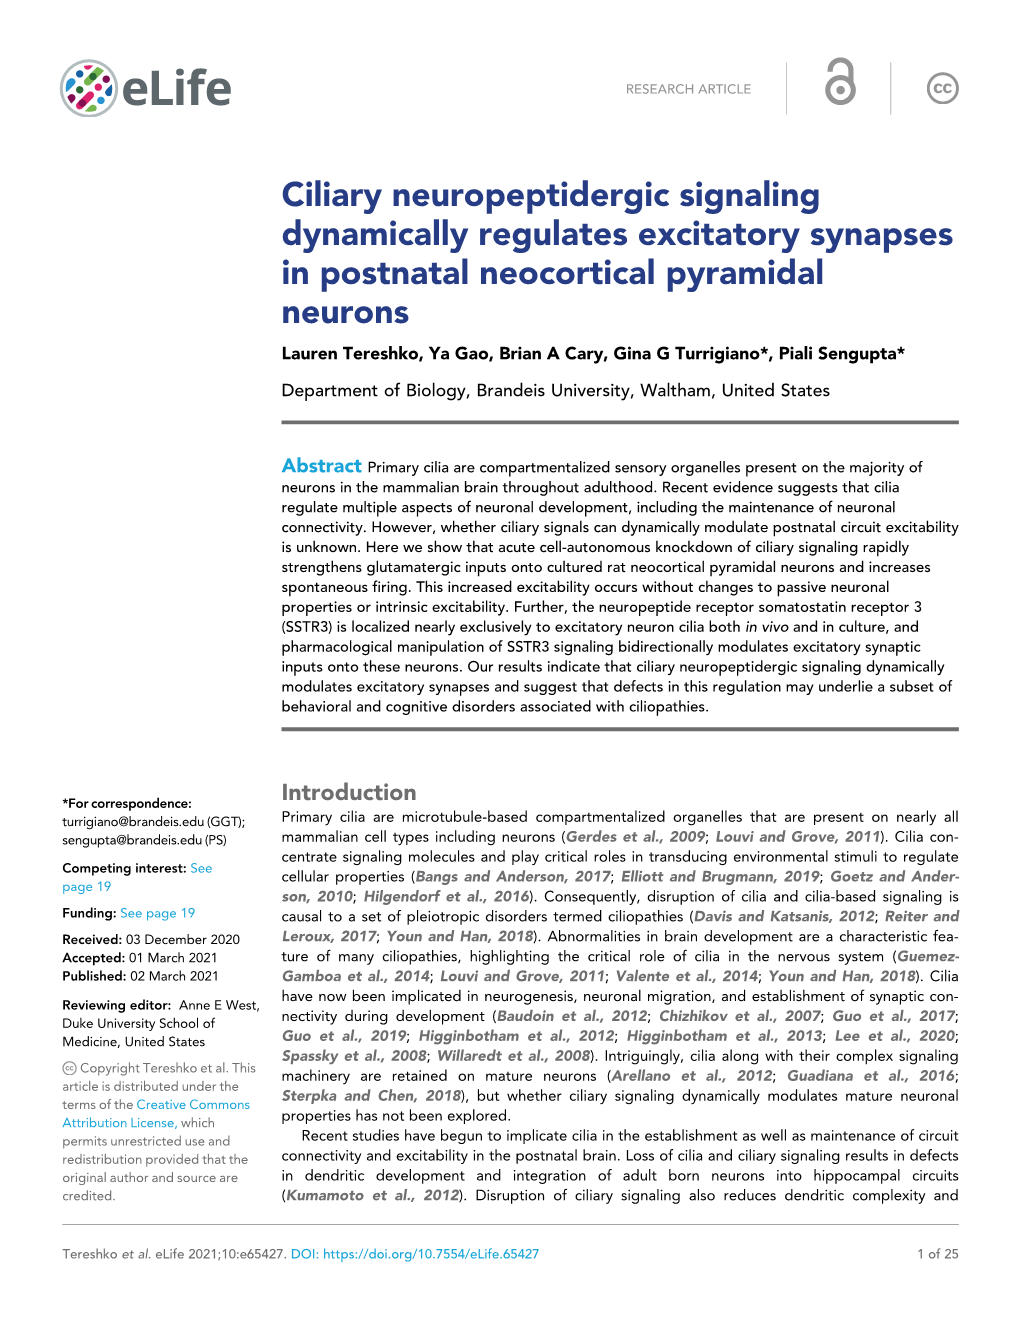 Ciliary Neuropeptidergic Signaling Dynamically Regulates Excitatory